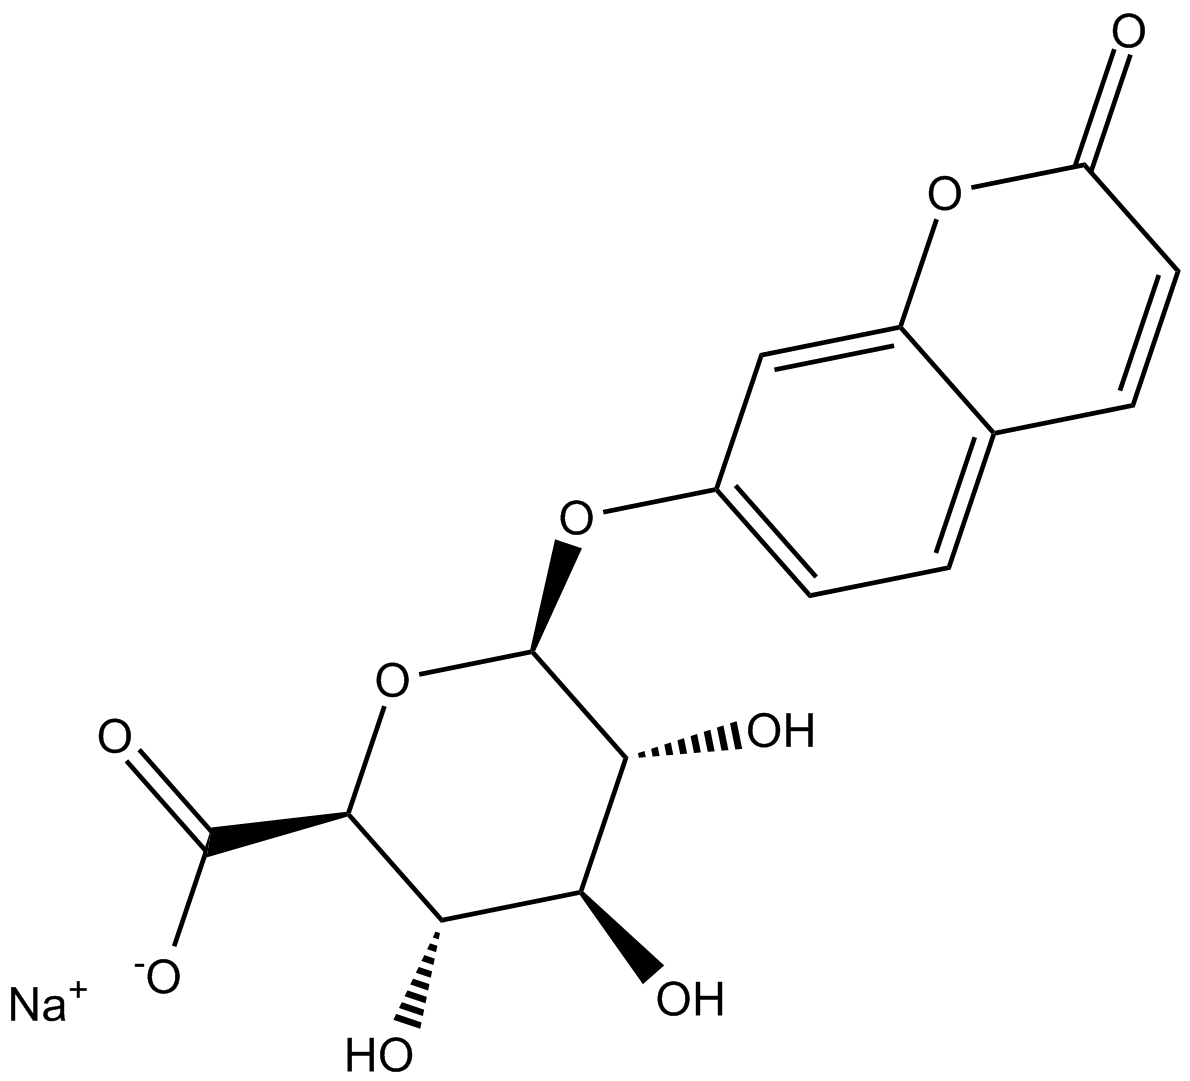 7-Hydroxy Coumarin Glucuronide (sodium salt)